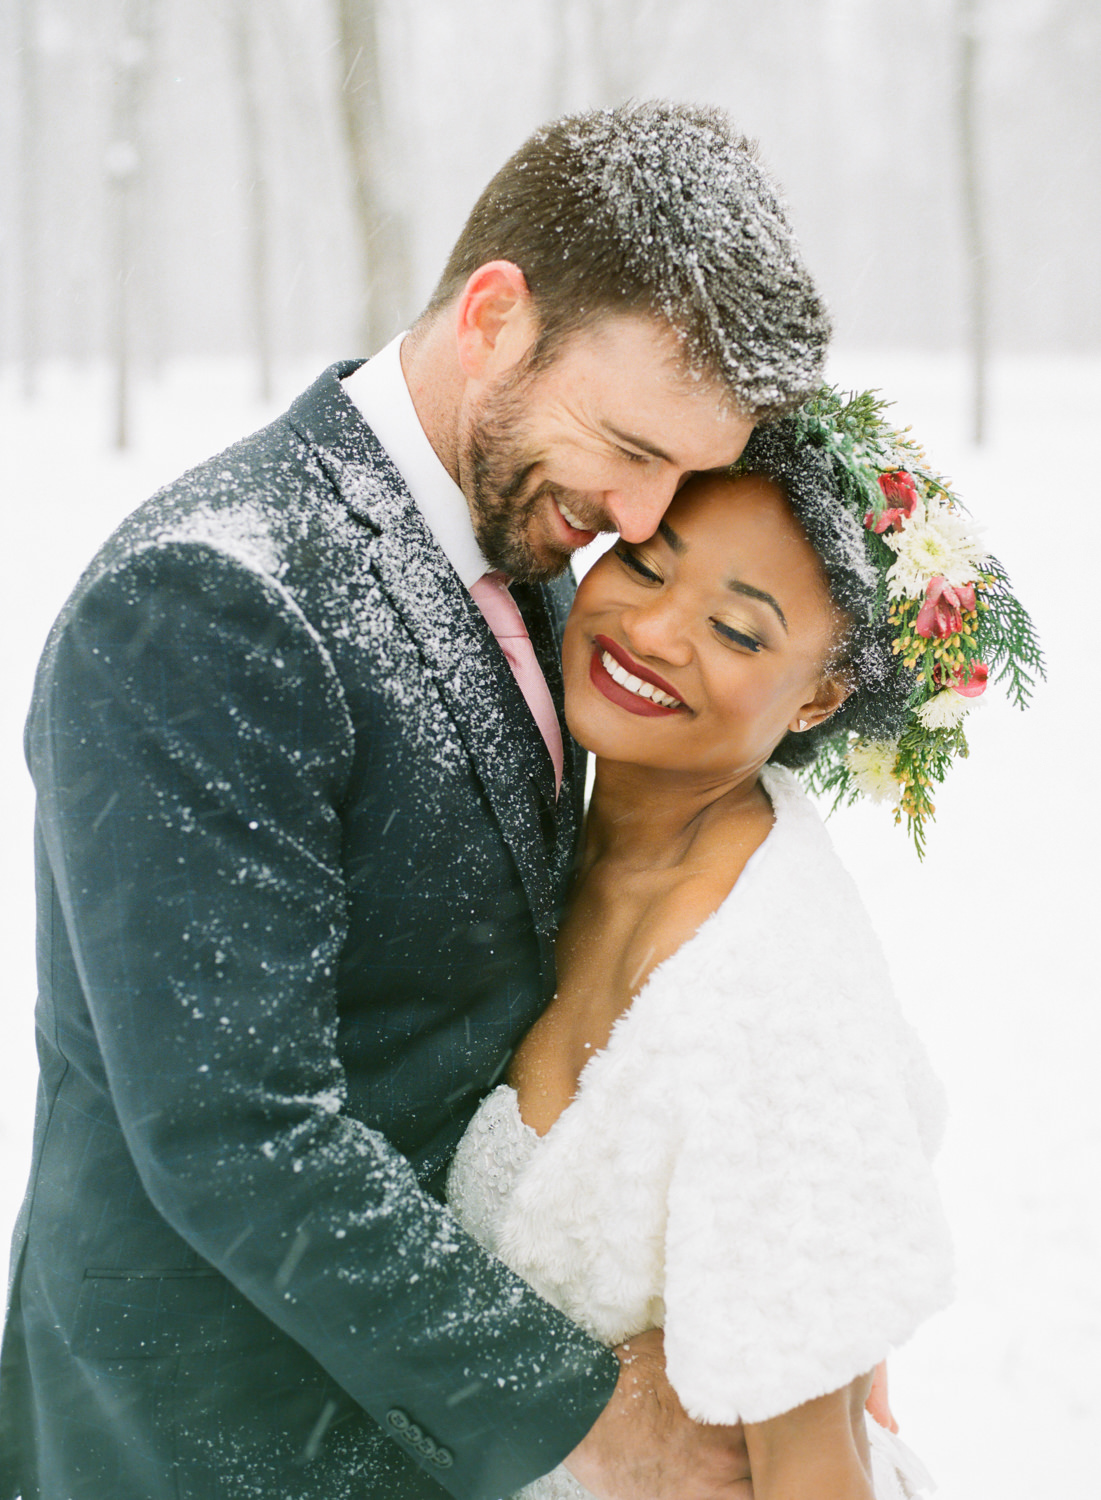 Winter wedding bride with flower crown and groom in snow; St. Louis fine art film wedding photographer Erica Robnett Photography